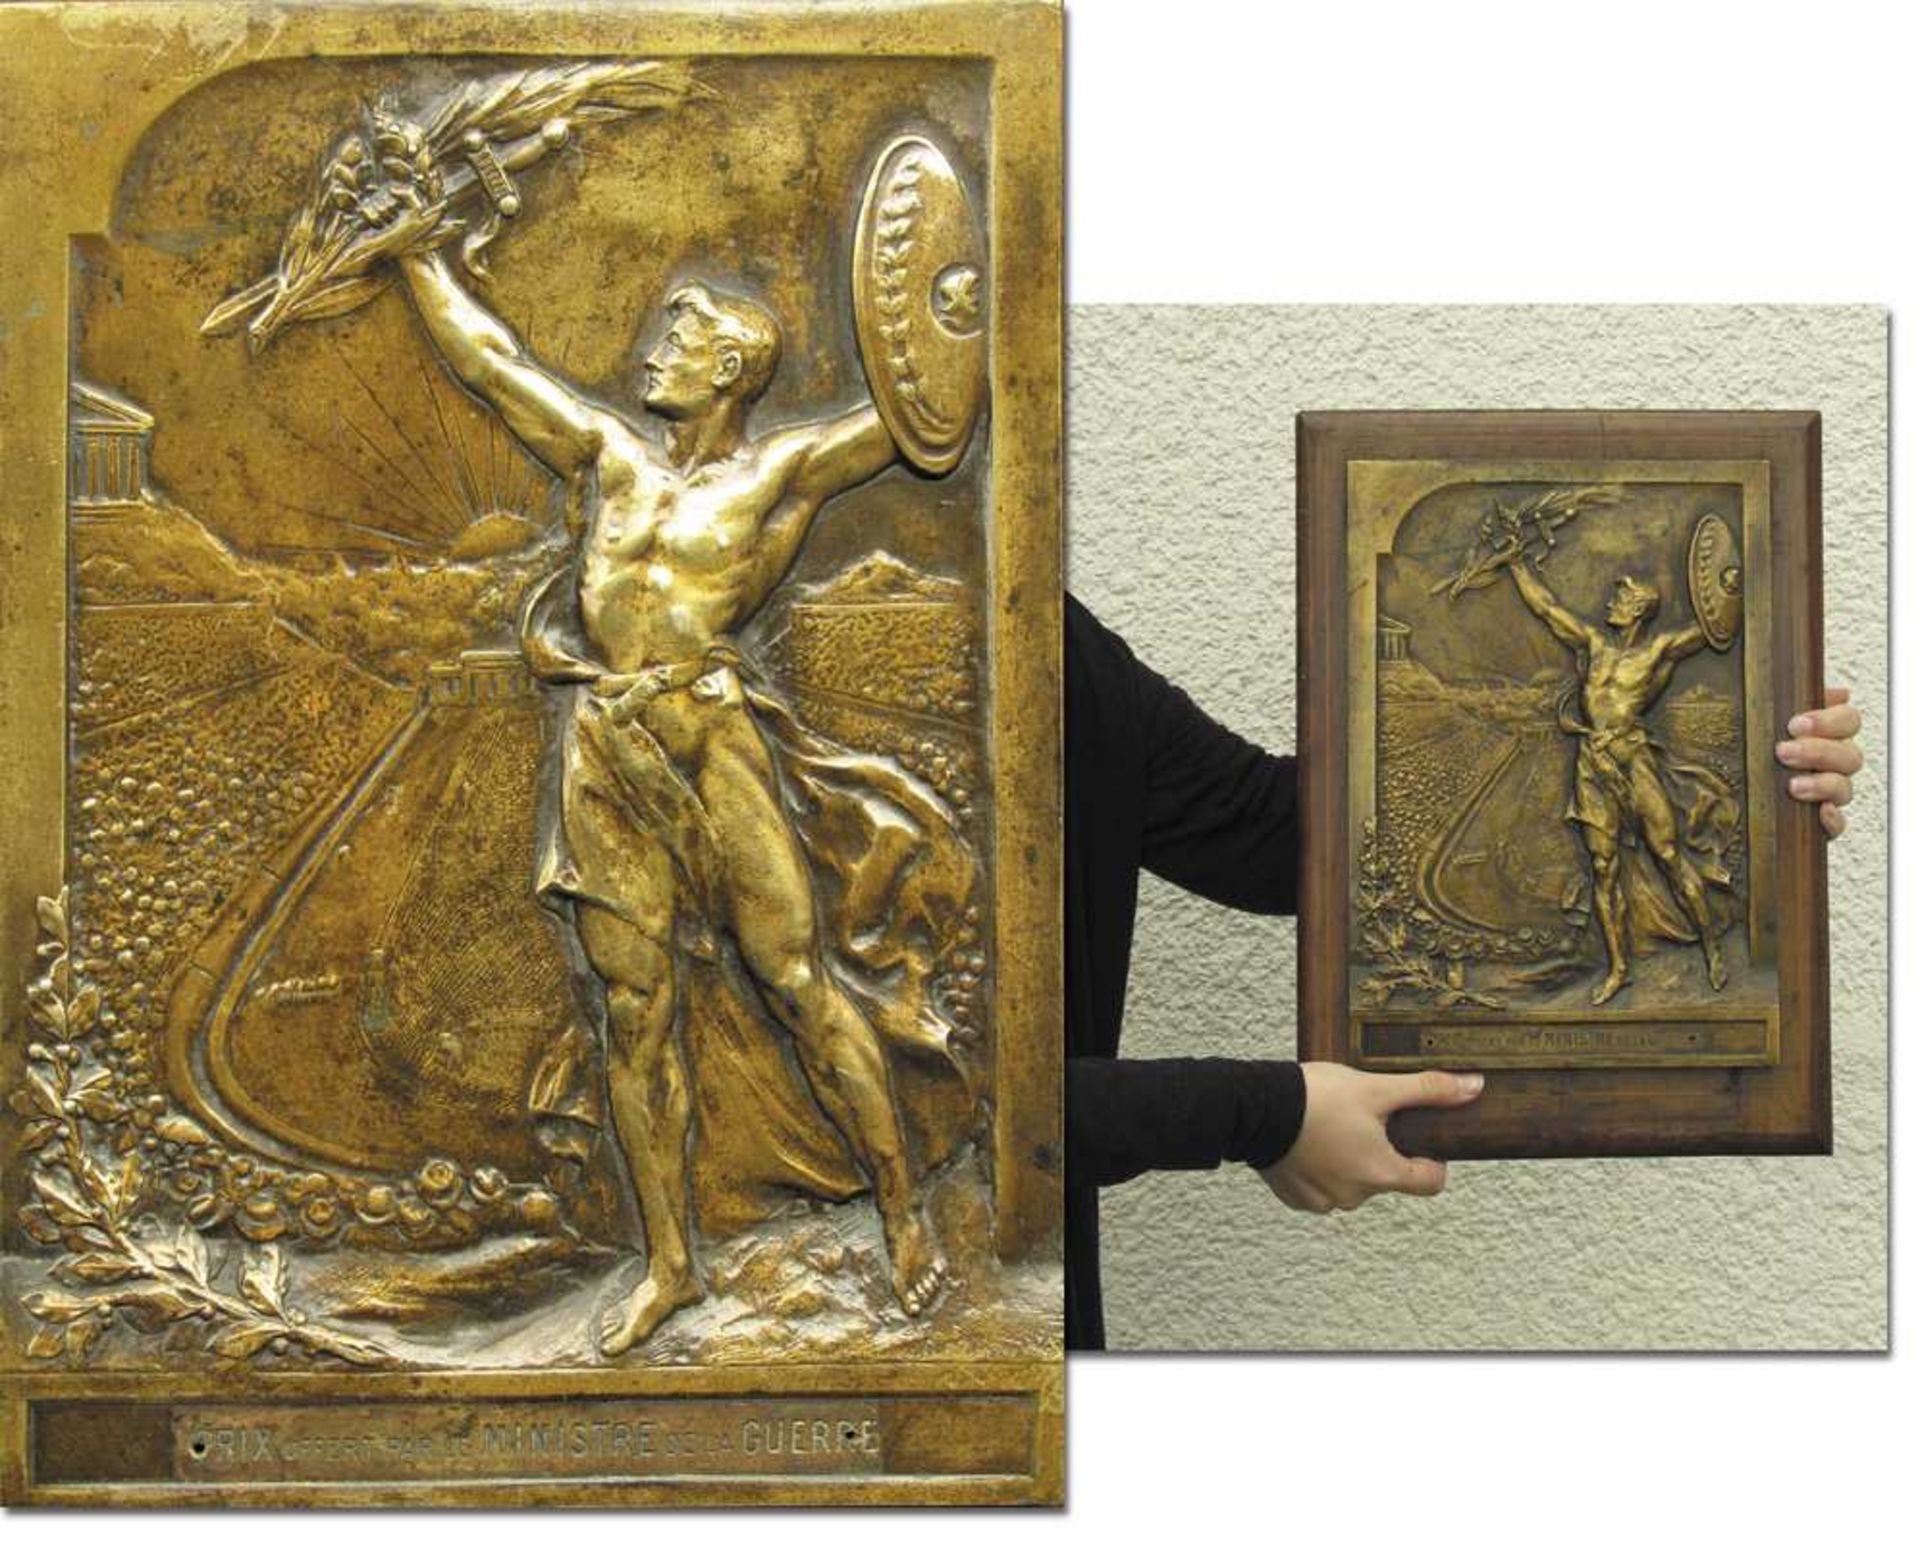 Olympic Games 1906. Bronze Winner's Plaque - Large, bronze ( 32.5x22.4cm) relief plaque engraved "